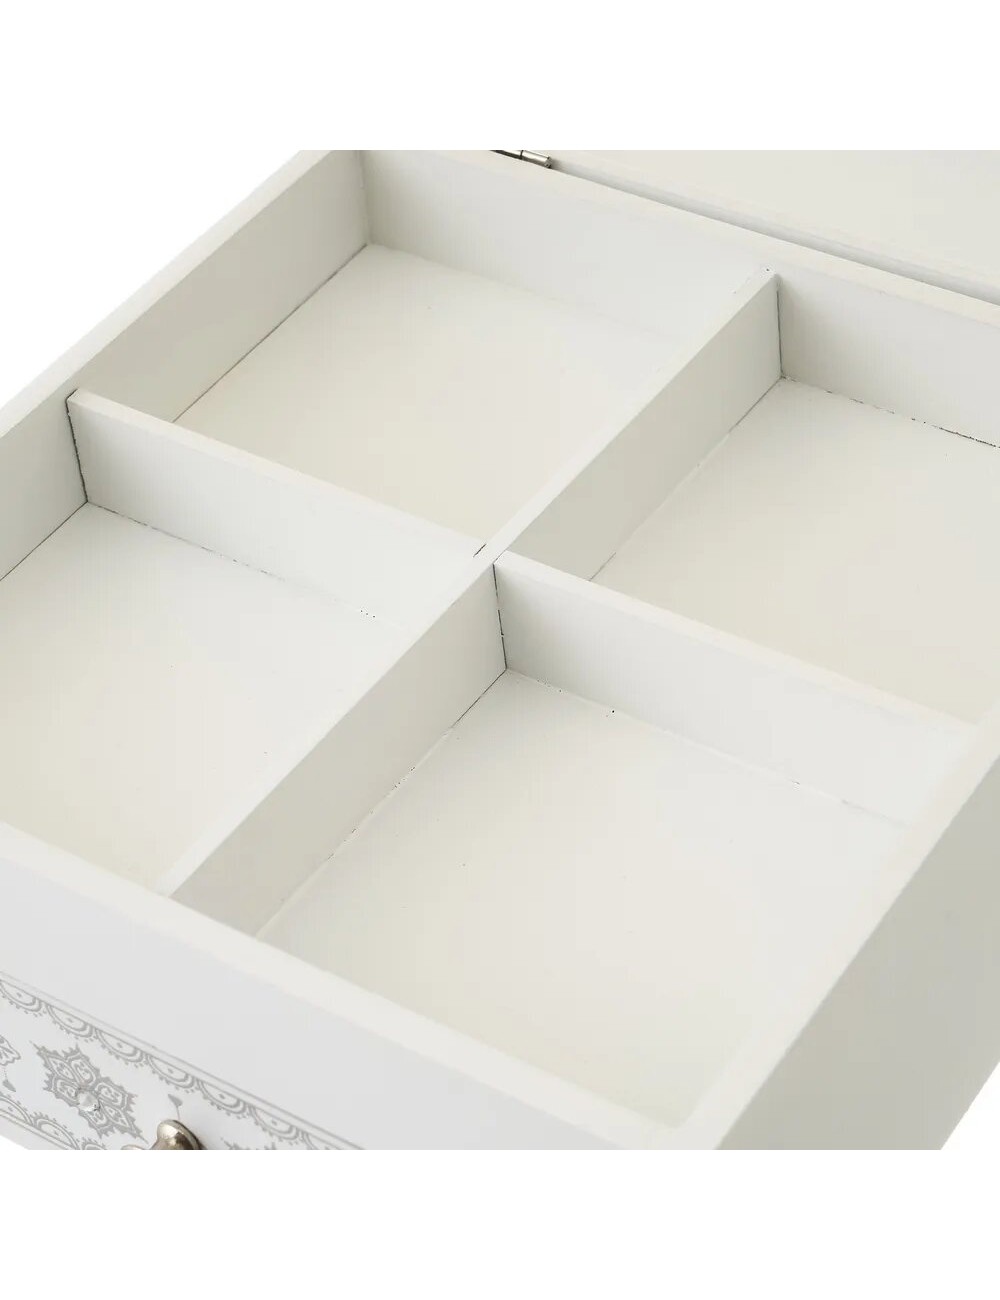 Caja-Joyero blanco 13,5x7x13,5 cm - Embargosalobestia